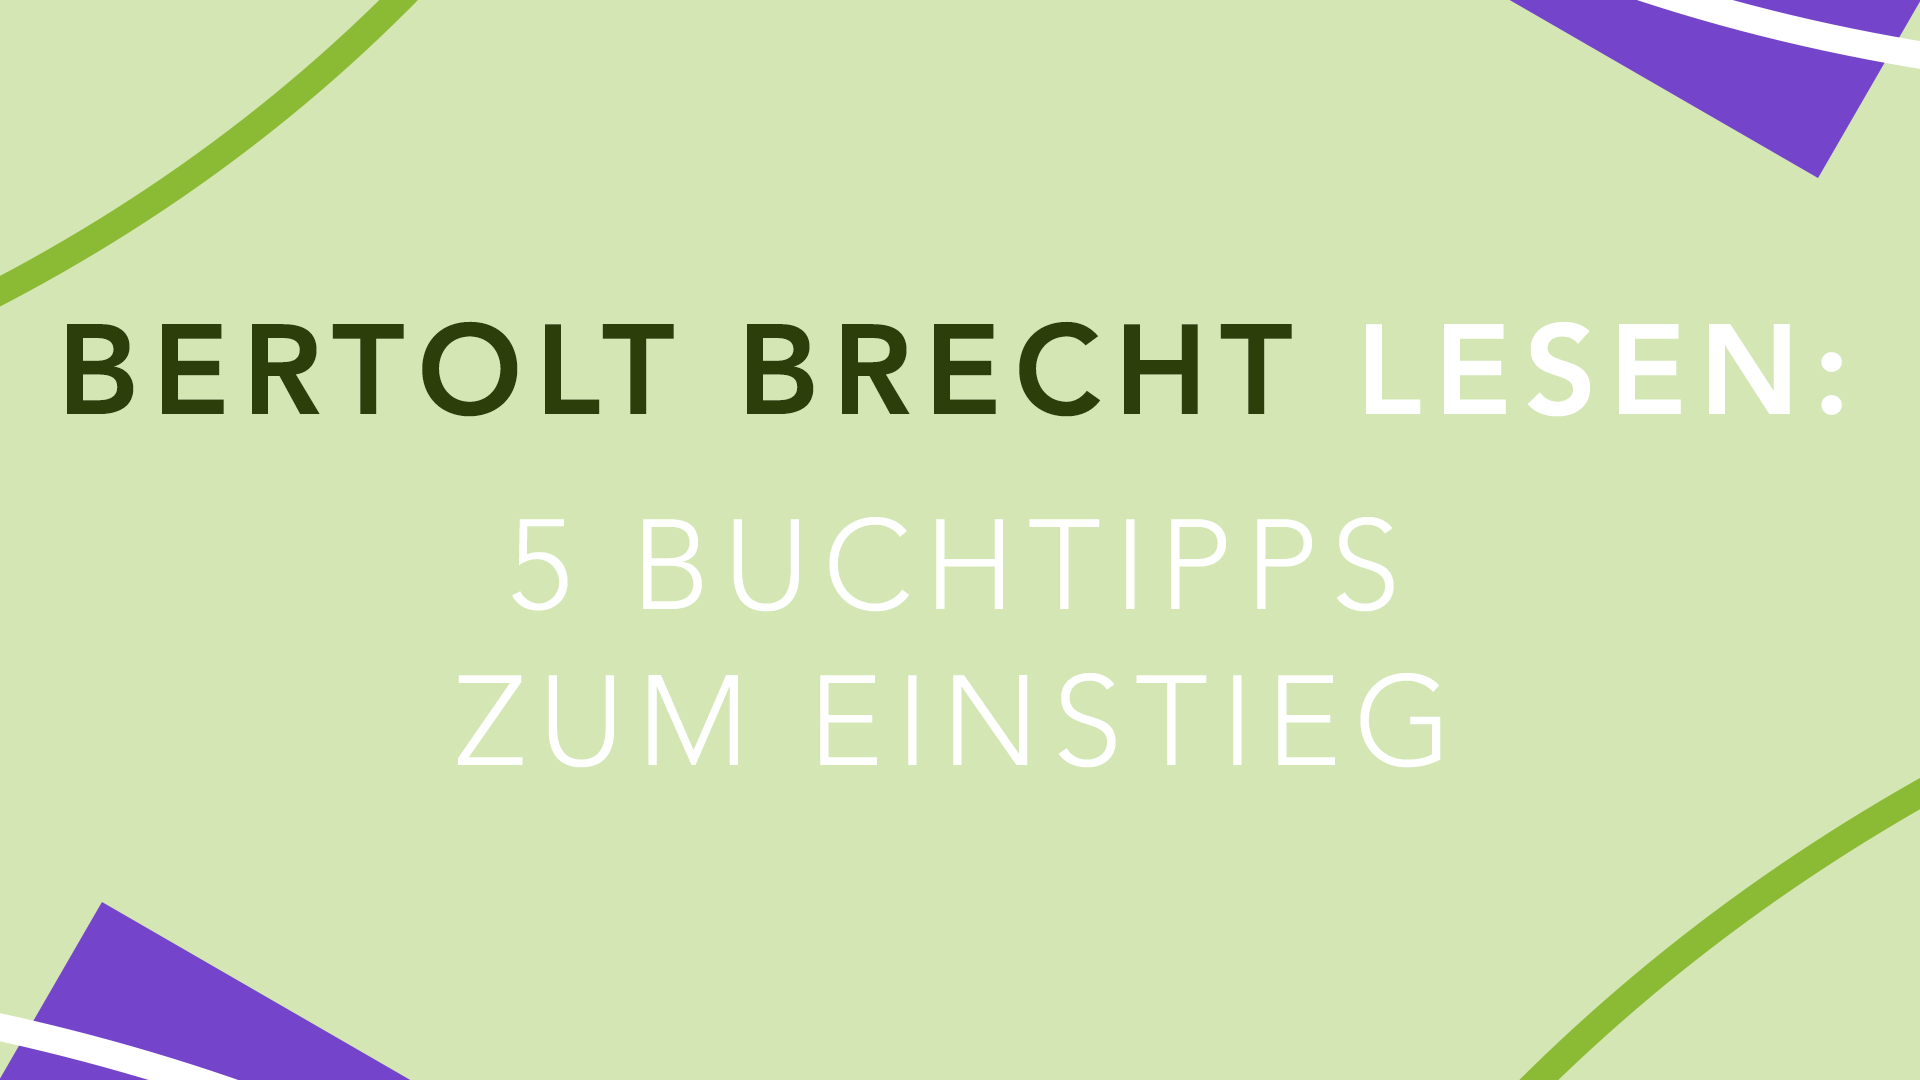 Bertolt Brecht lesen: 5 Buchtipps zum Einstieg